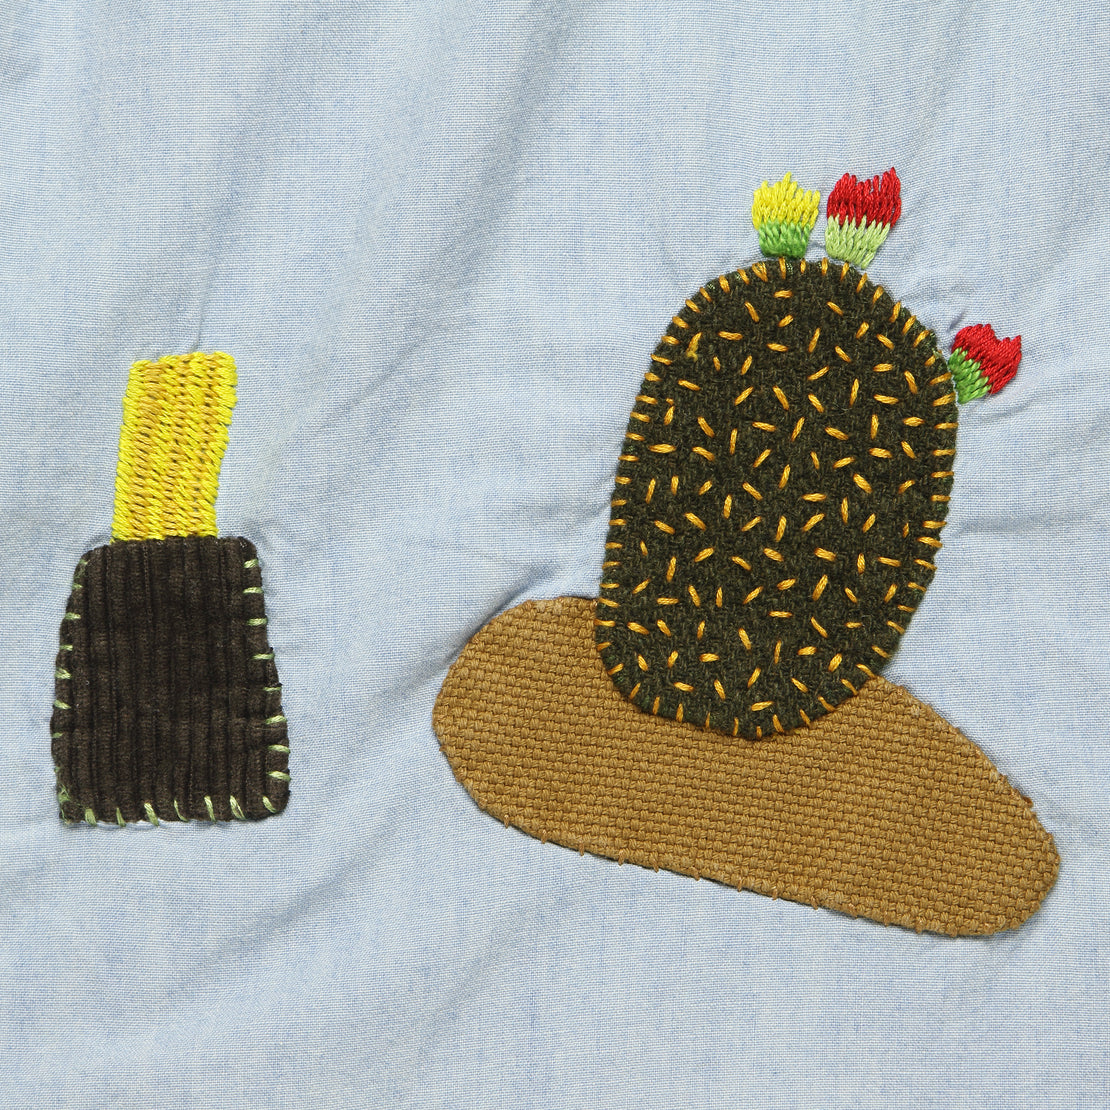 Chambray Work Shirt with Cactus Embroidery - Indigo